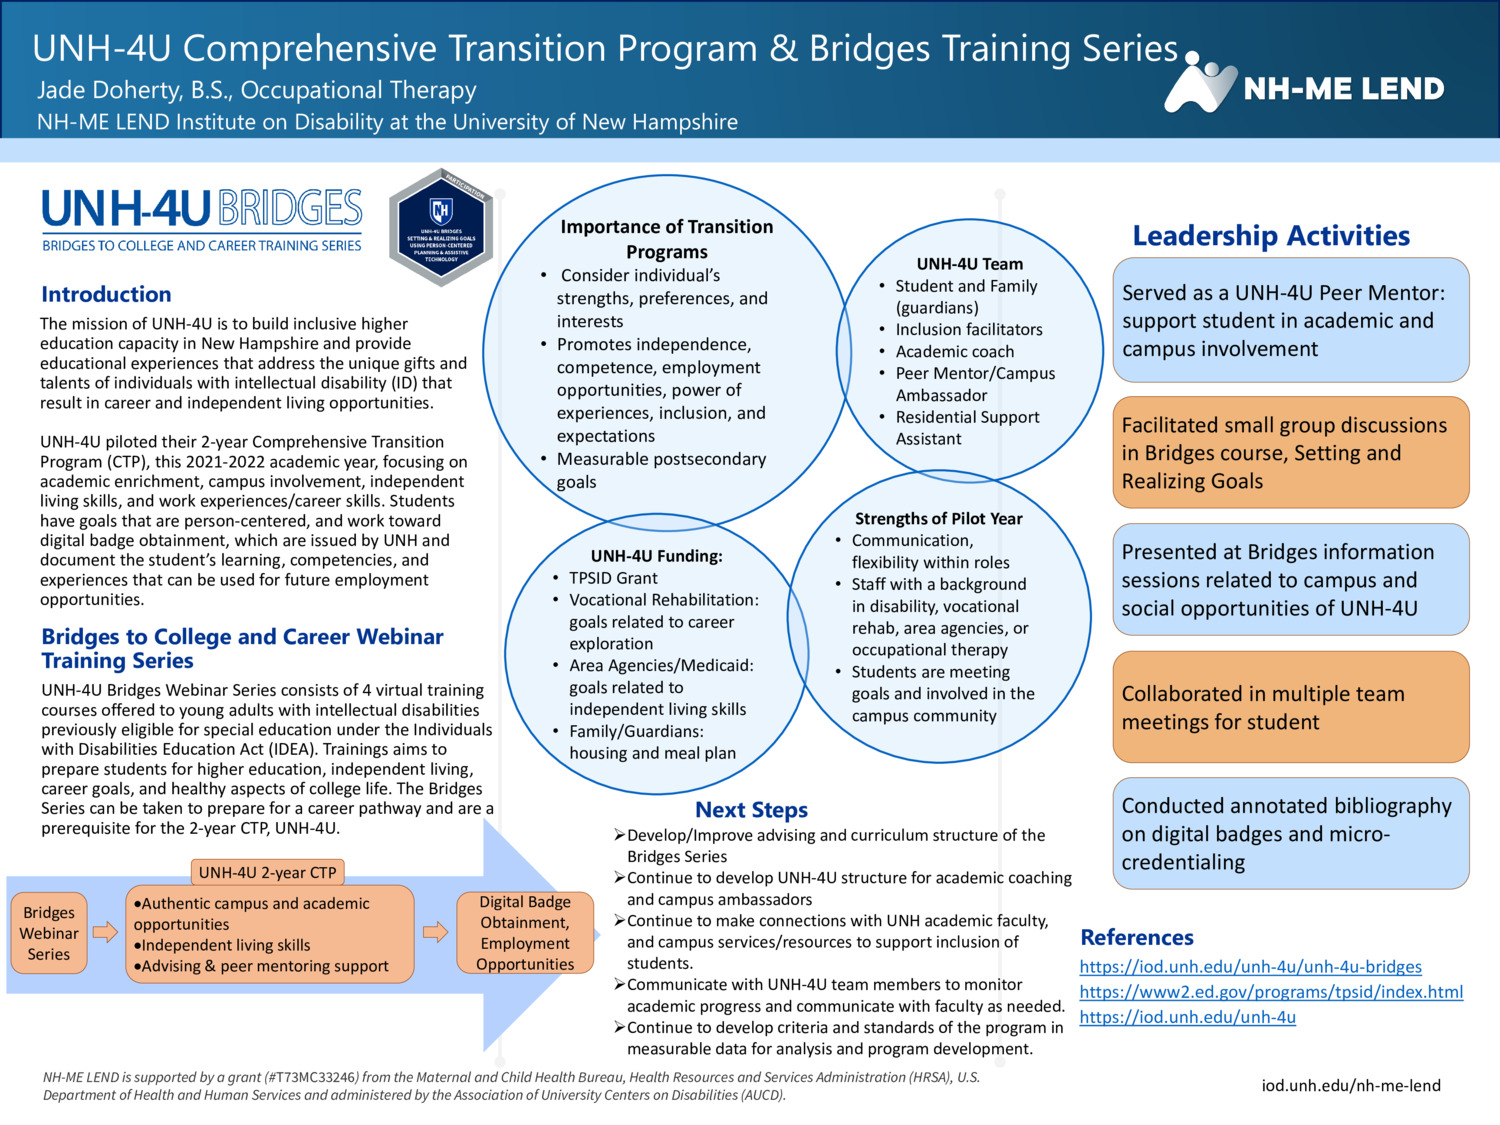 Unh-4u Comprehensive Transition Program And Bridges Training Series by jmd1085